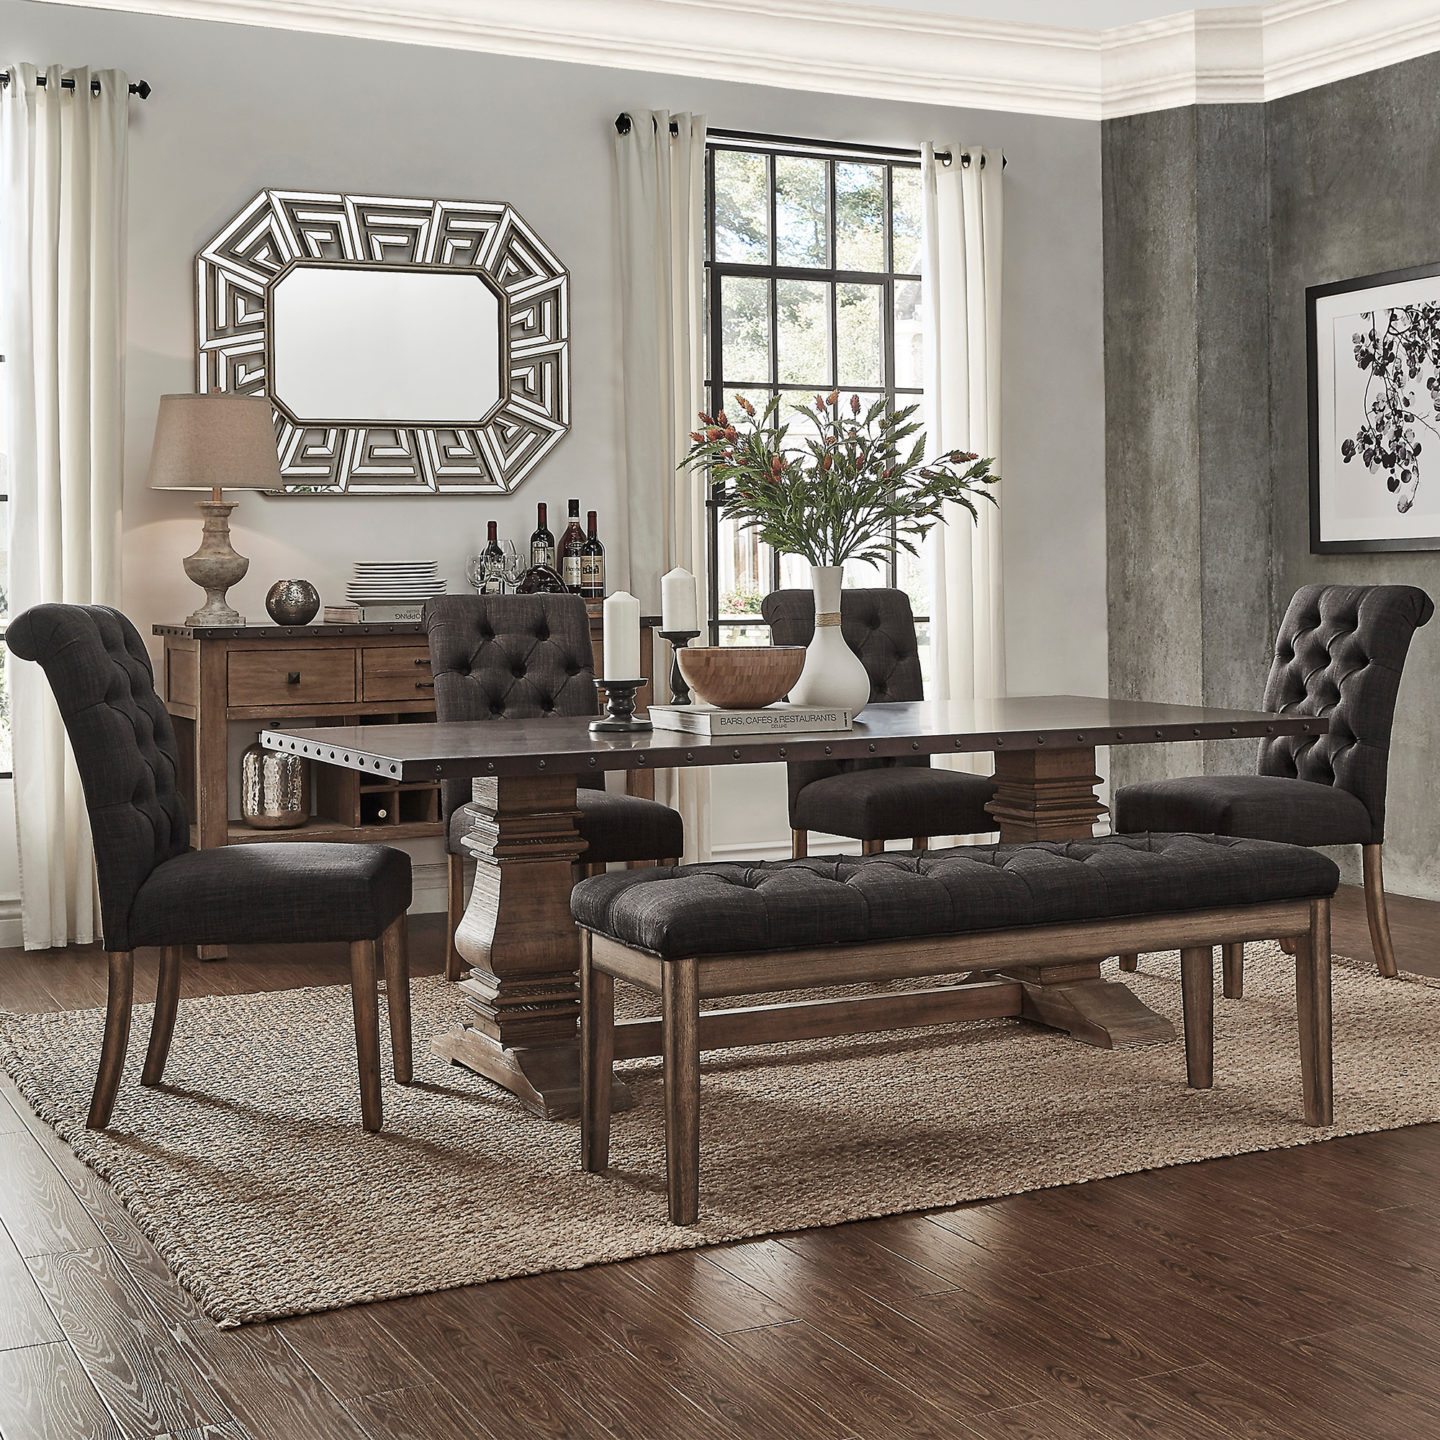 How to Choose Elegant Dining Room Furniture - Overstock.com